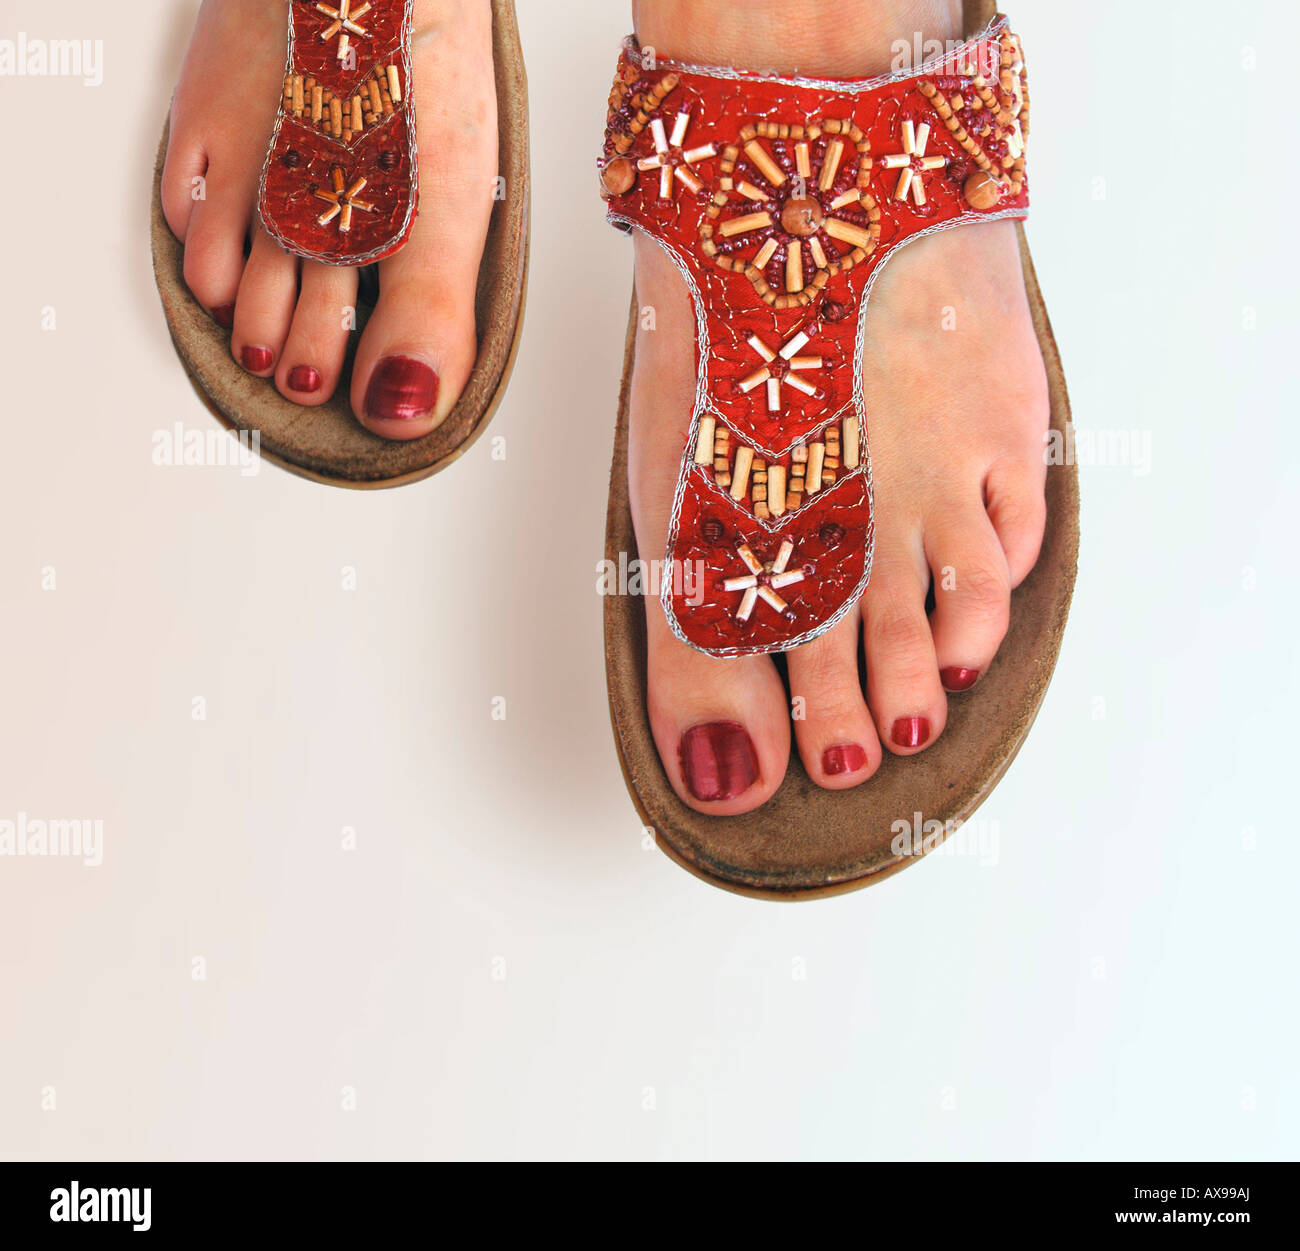 Füße, Sandalen, Sommer, Nagellack, rot, dekoriert, Zehen Stockfotografie -  Alamy